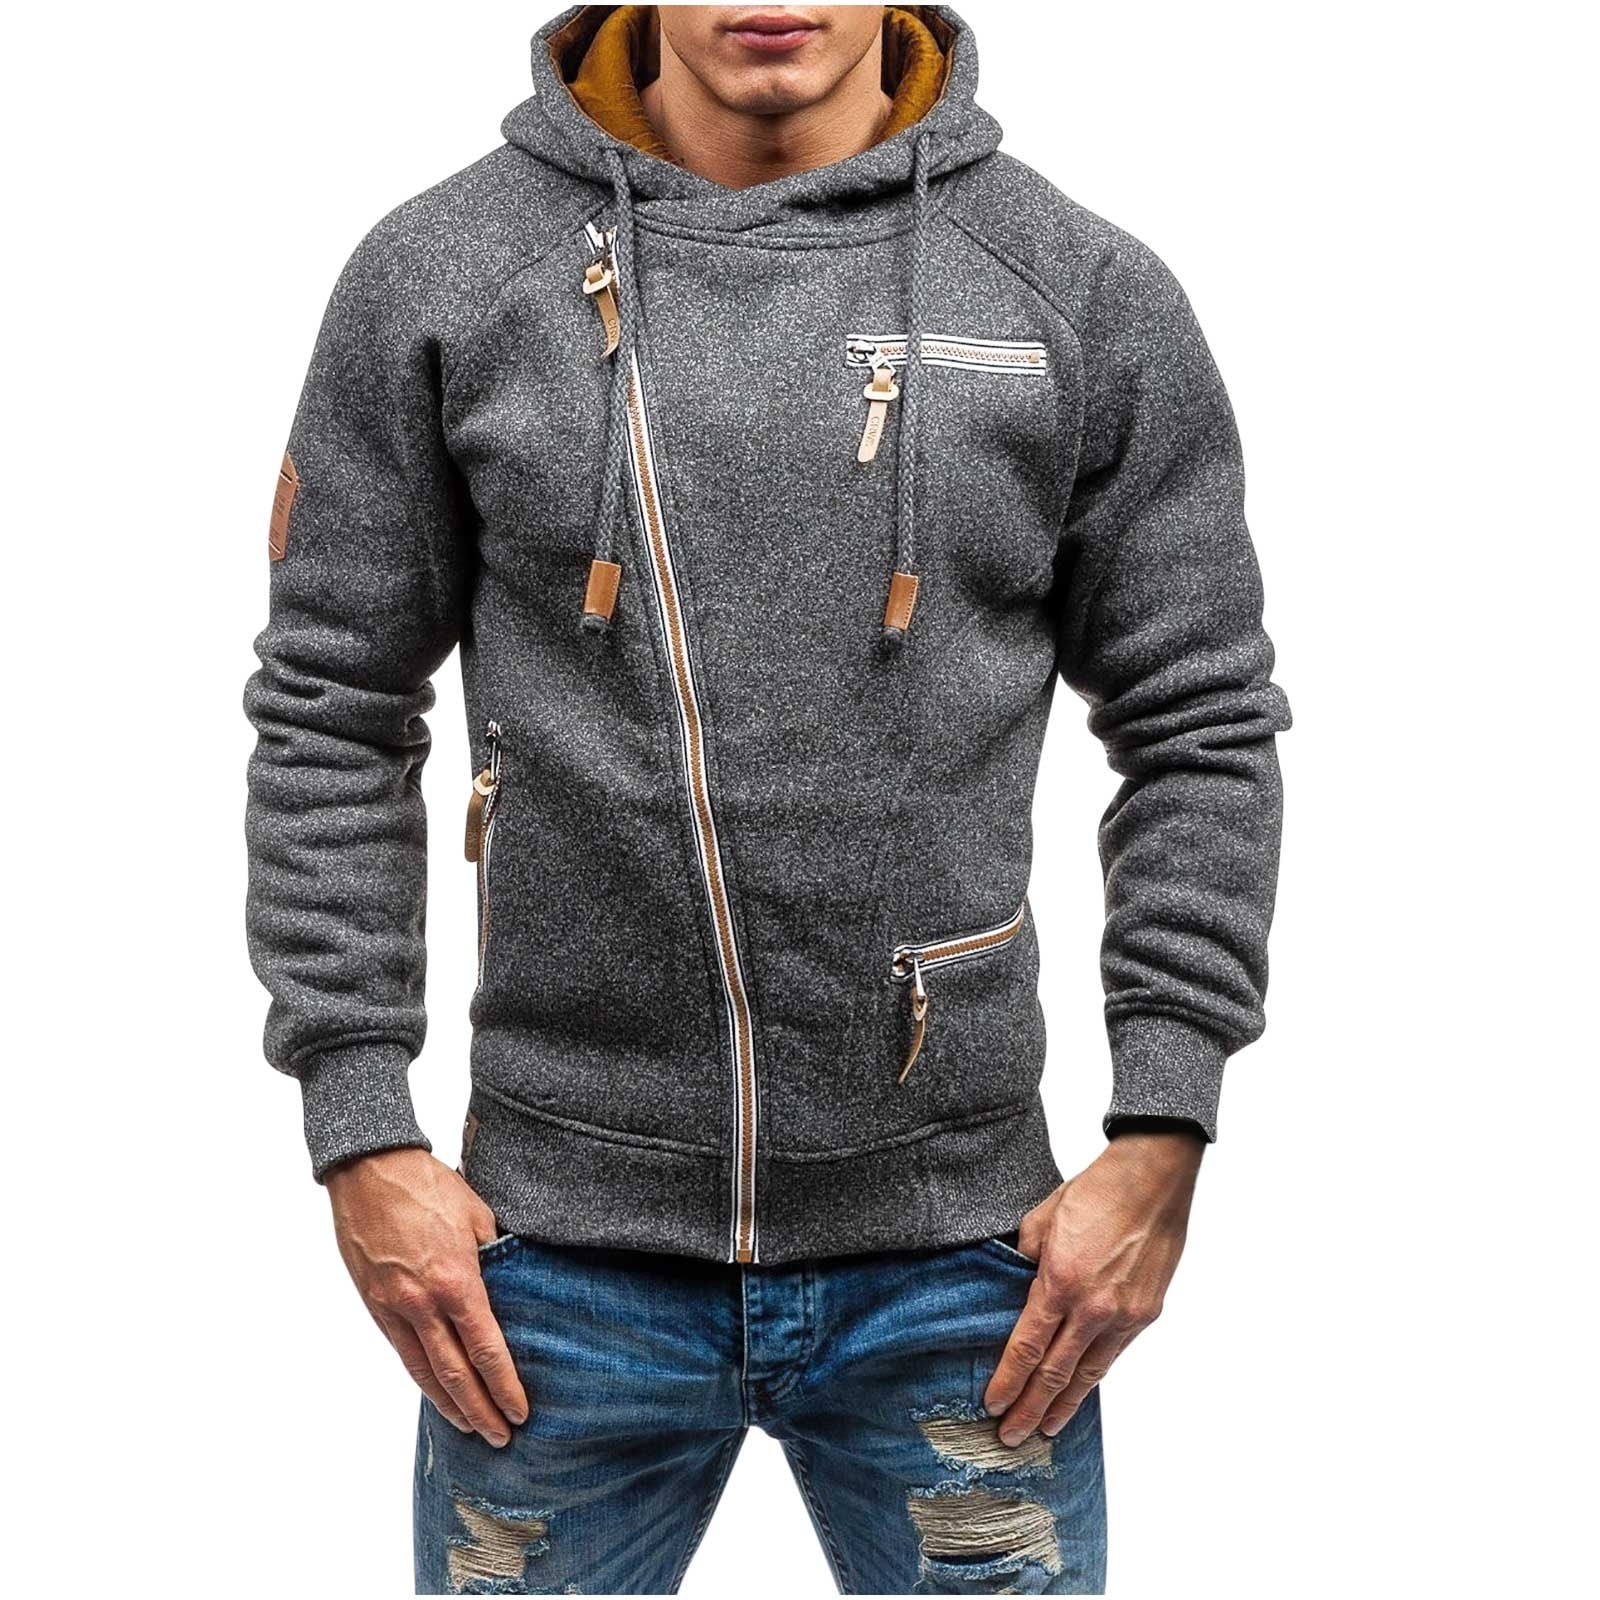 Amorous Tegne forsikring æstetisk Hfyihgf Men's Fashion Cool Hoodies Jacket Slim Fit Unique Design Zipper  Casual Hooded Sweatshirt Comfy Coats with Multi-Pocket(01#Dark Gray,L) -  Walmart.com